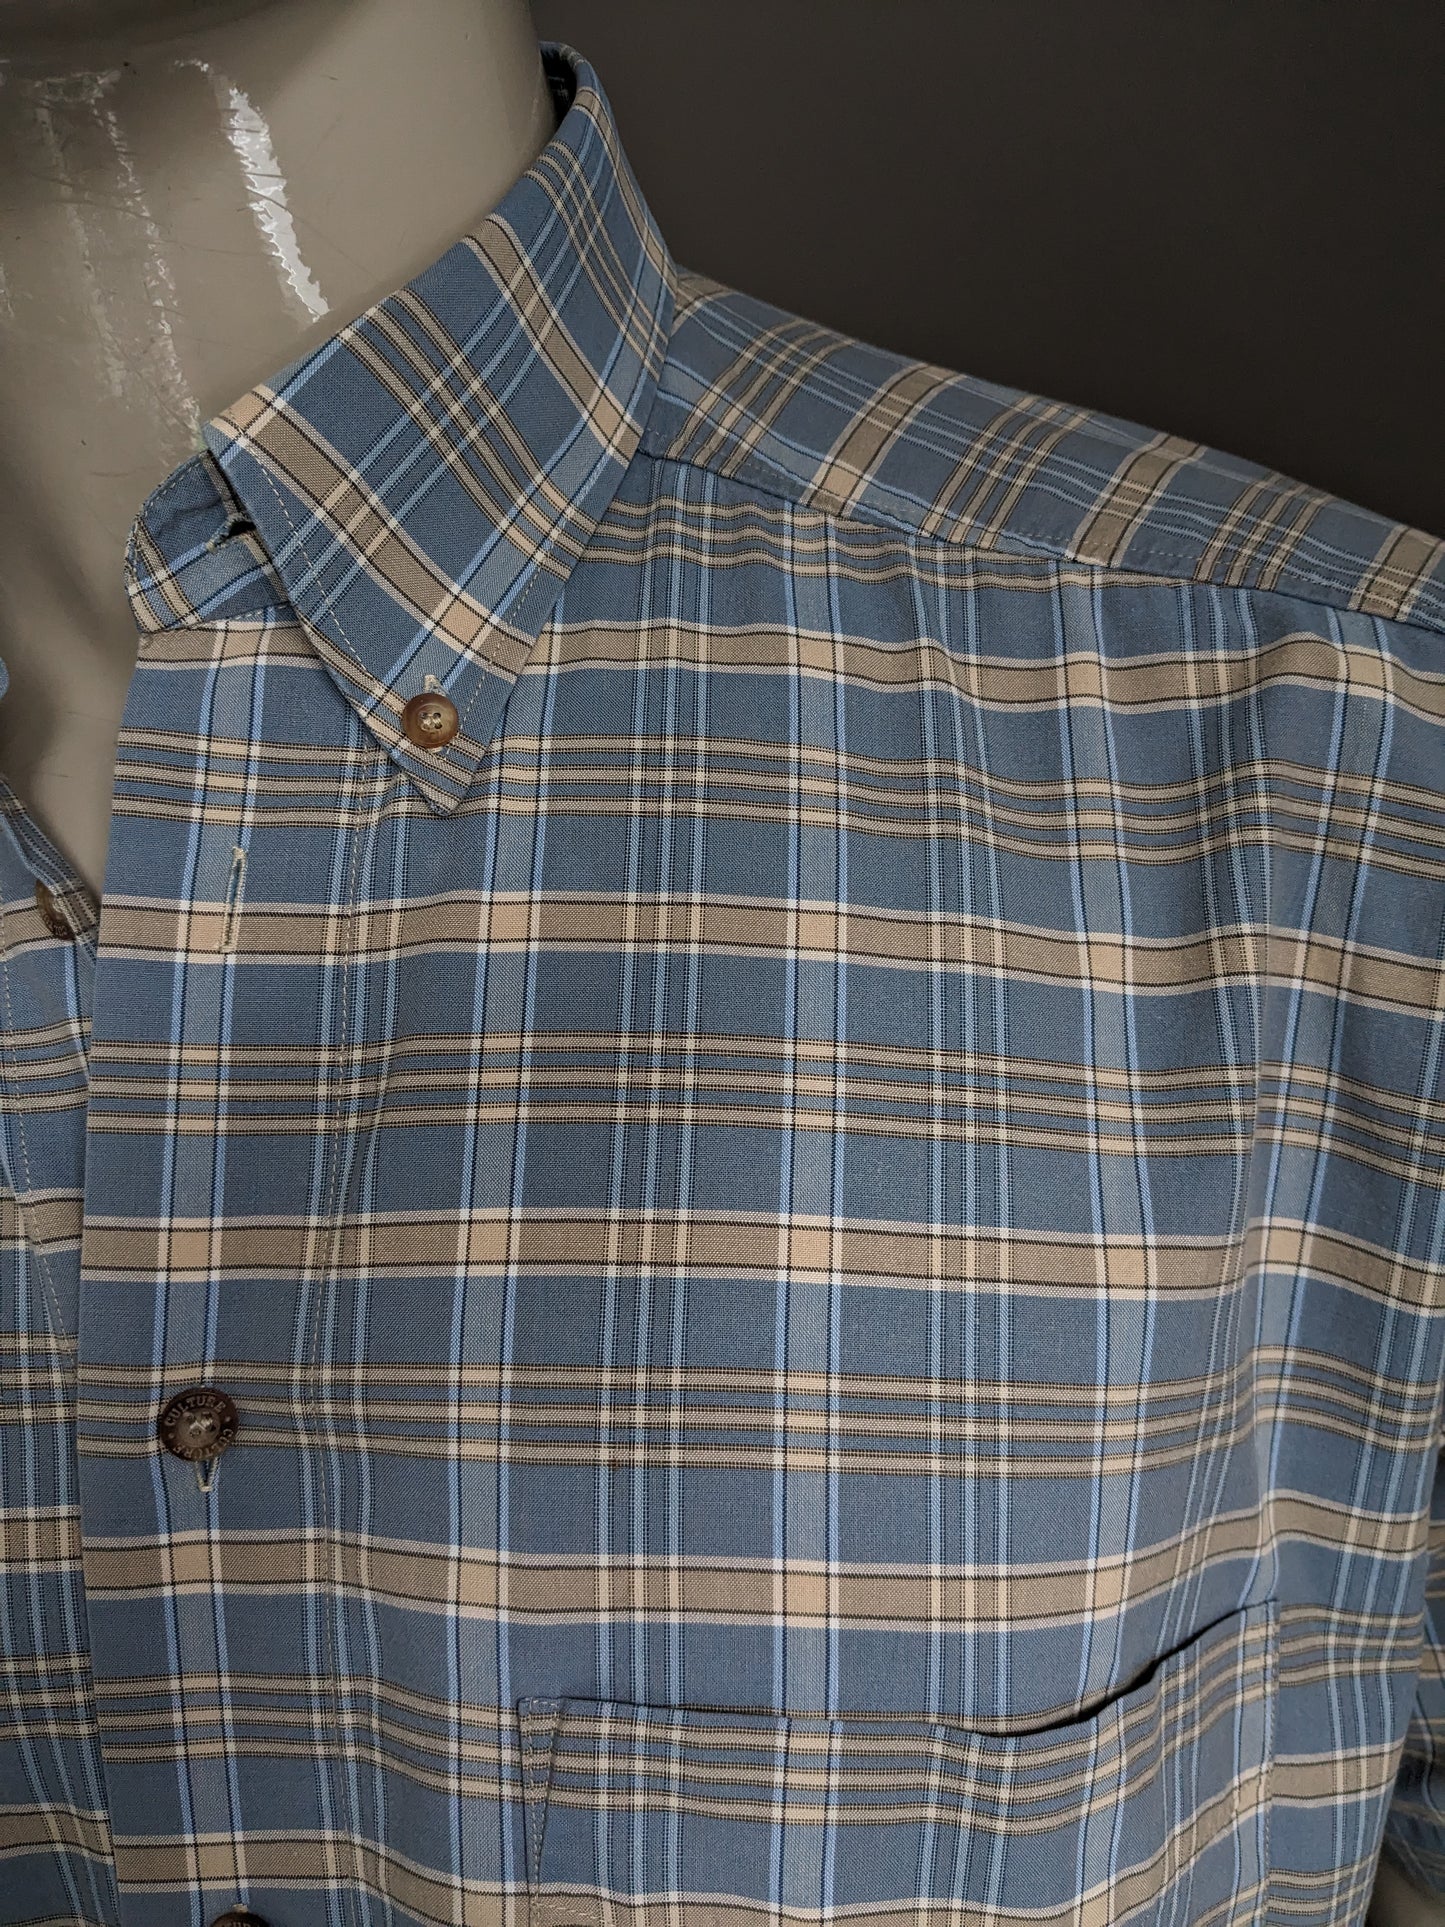 Camisa deportiva de cultura vintage manga corta. Verificador de color beige azul. Tamaño L / XL.